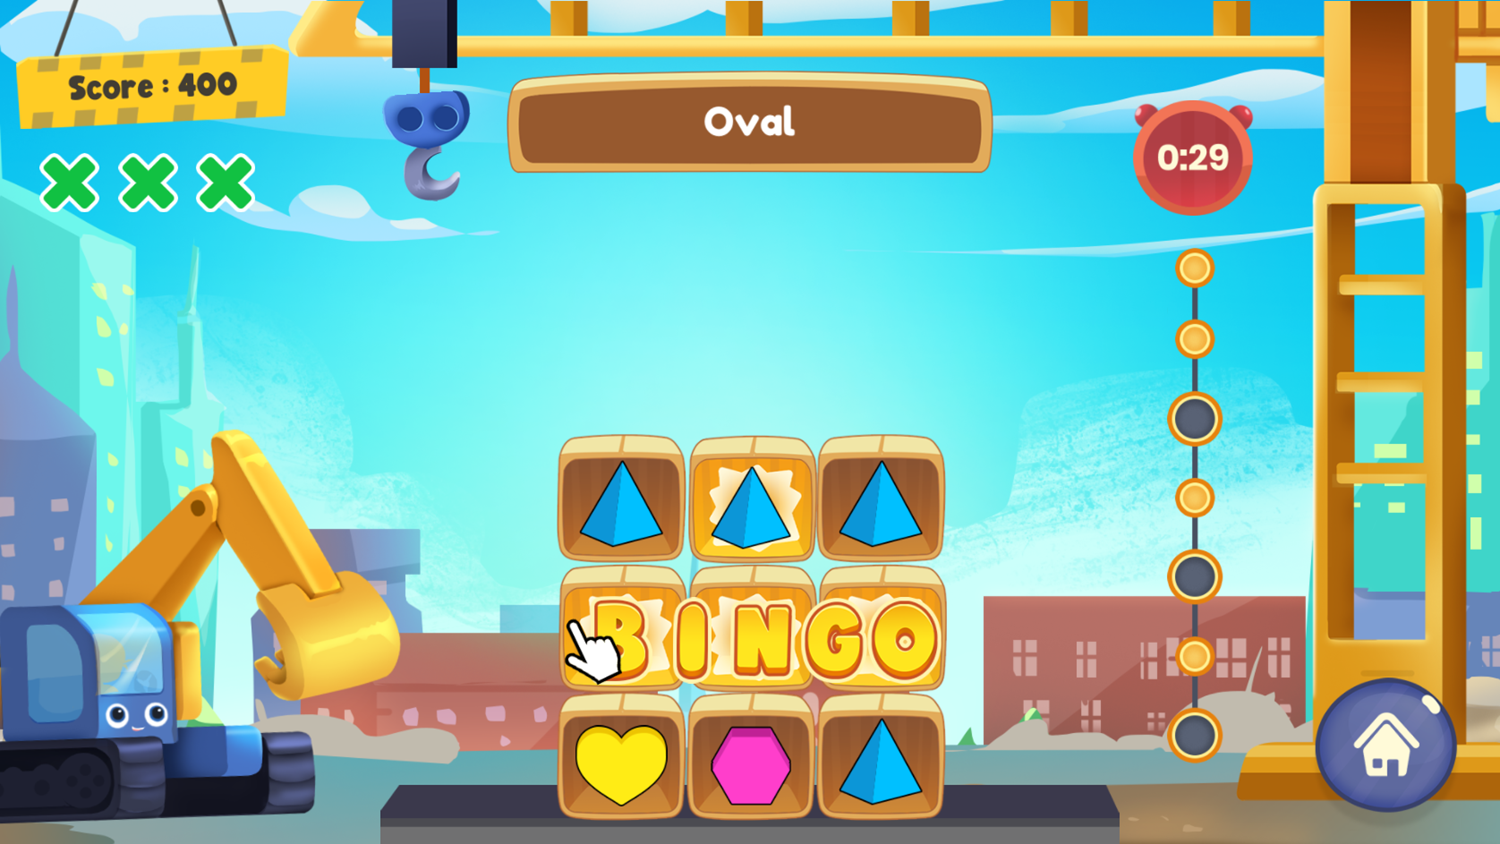 Ringo Bingo Game Bingo Welcome Screen Screenshot.